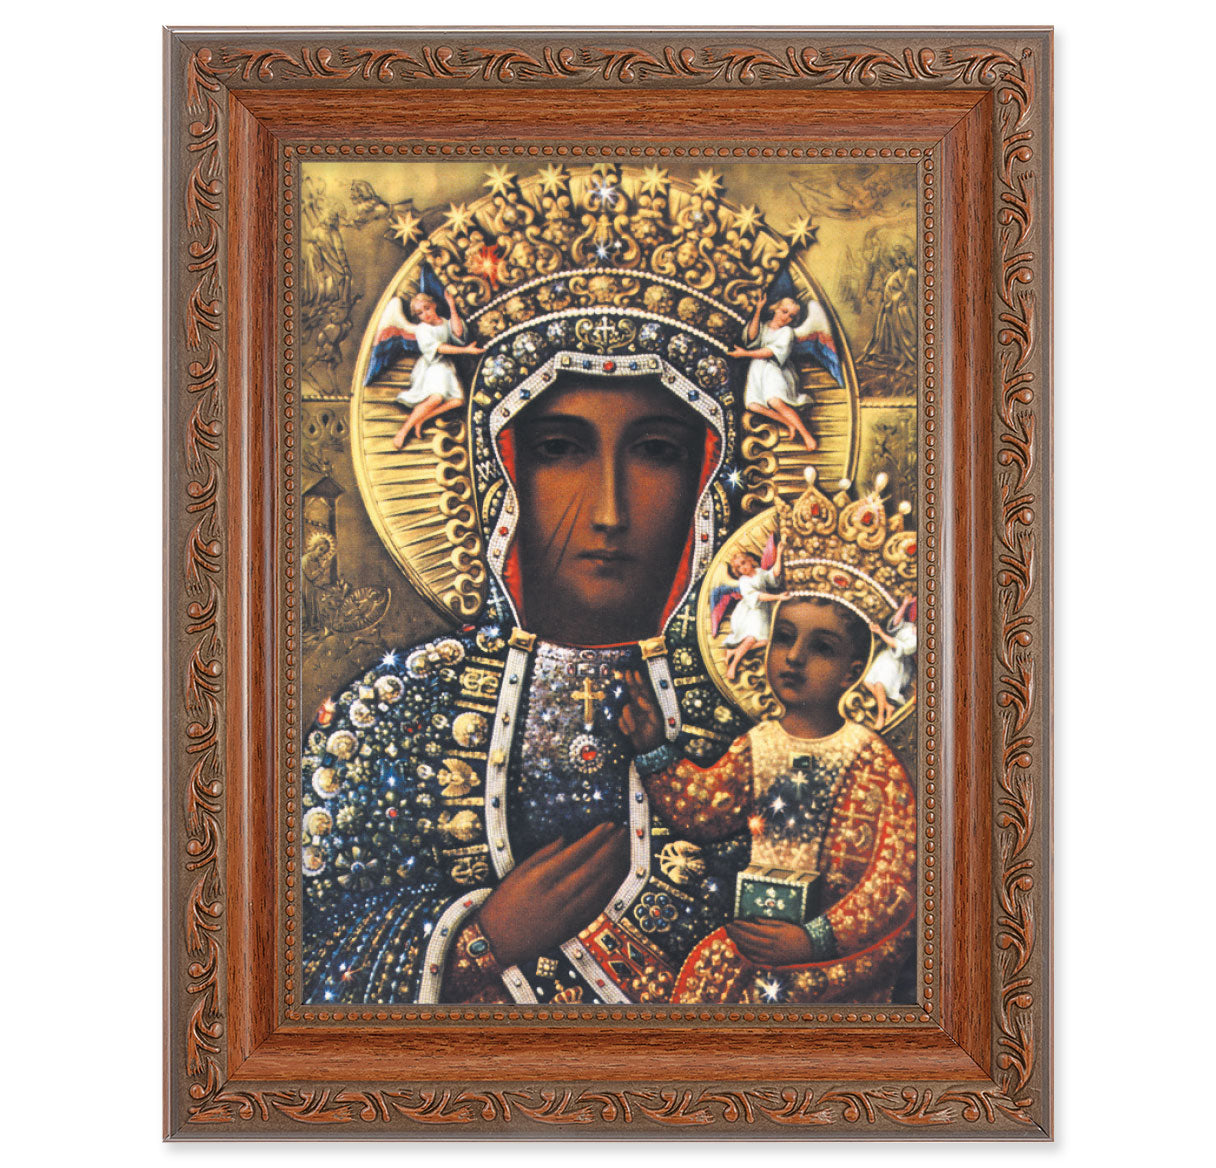 Our Lady of Czestochowa Mahogany Finish Framed Art